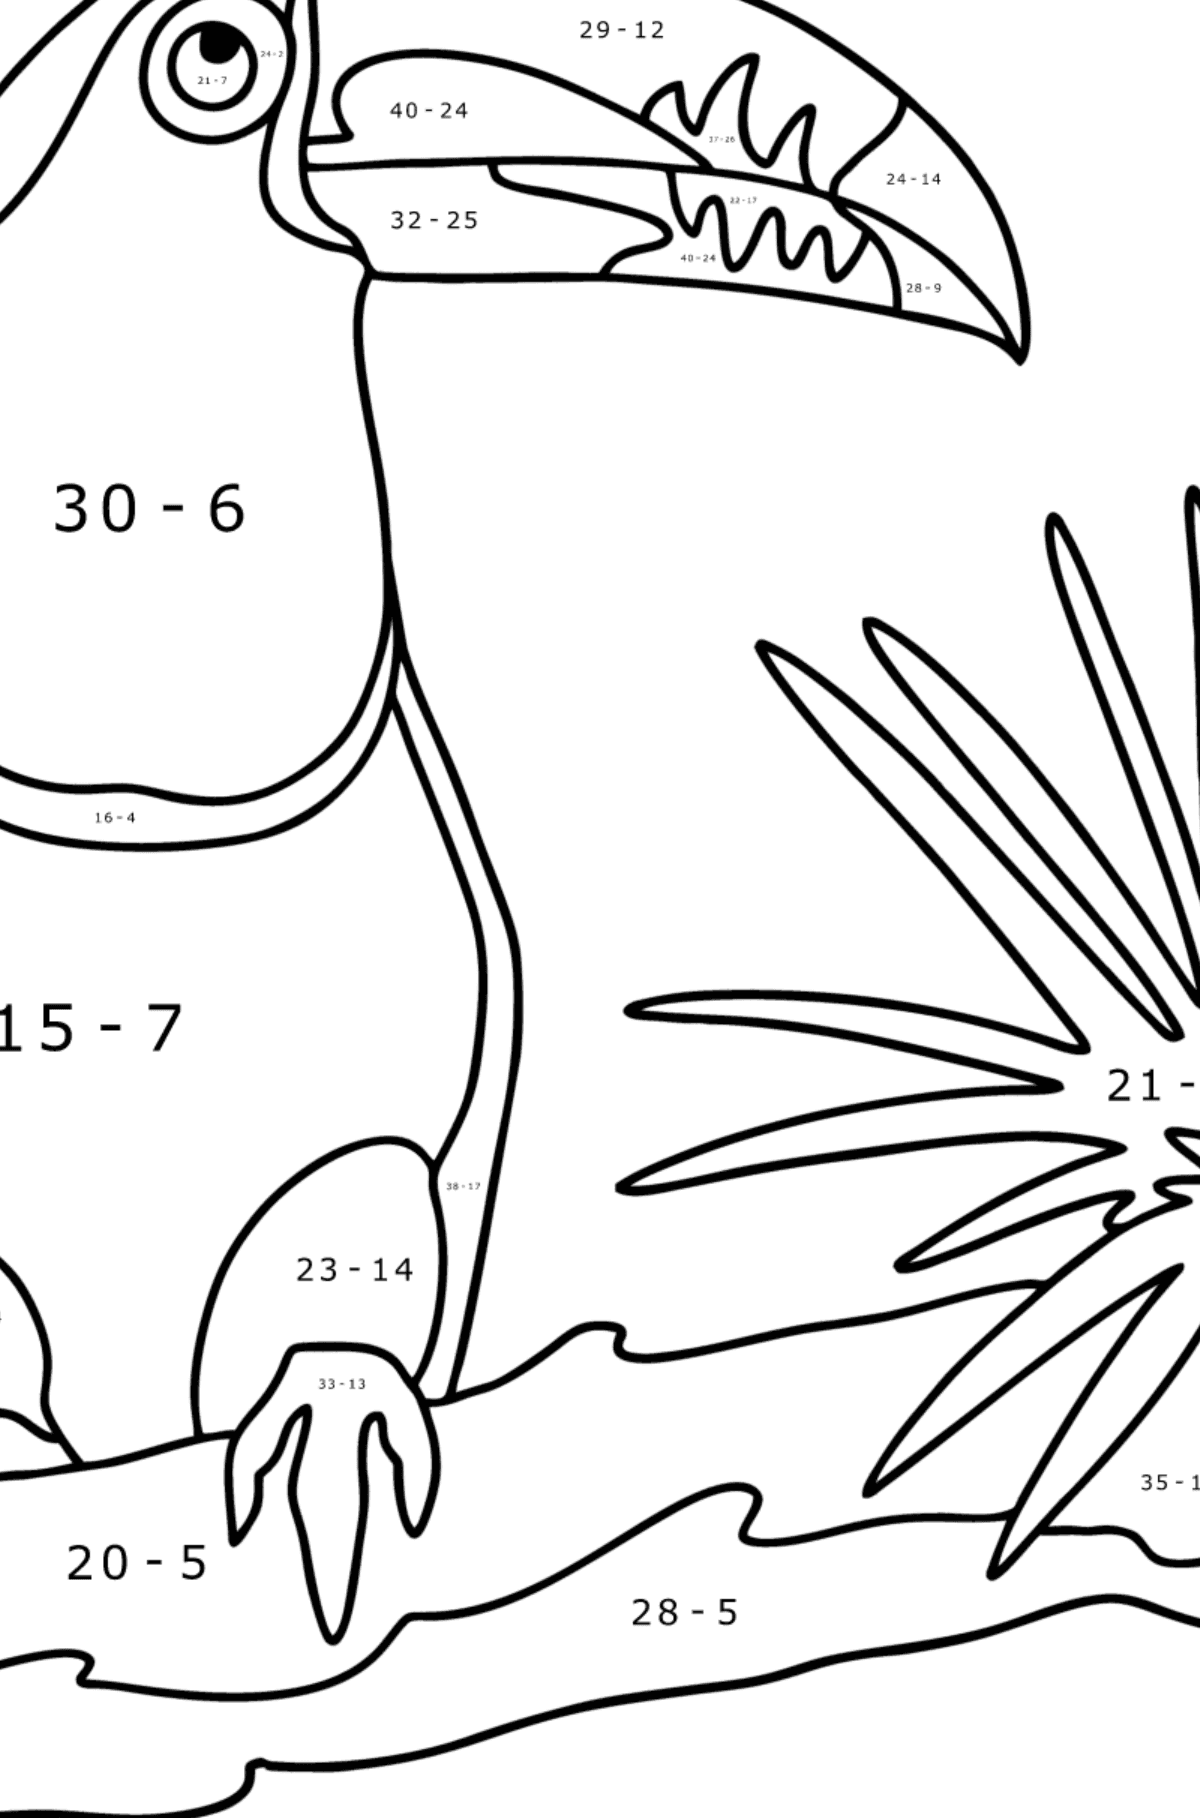 Mewarnai gambar Hutan Toucan - Pewarnaan Matematika: Pengurangan untuk anak-anak